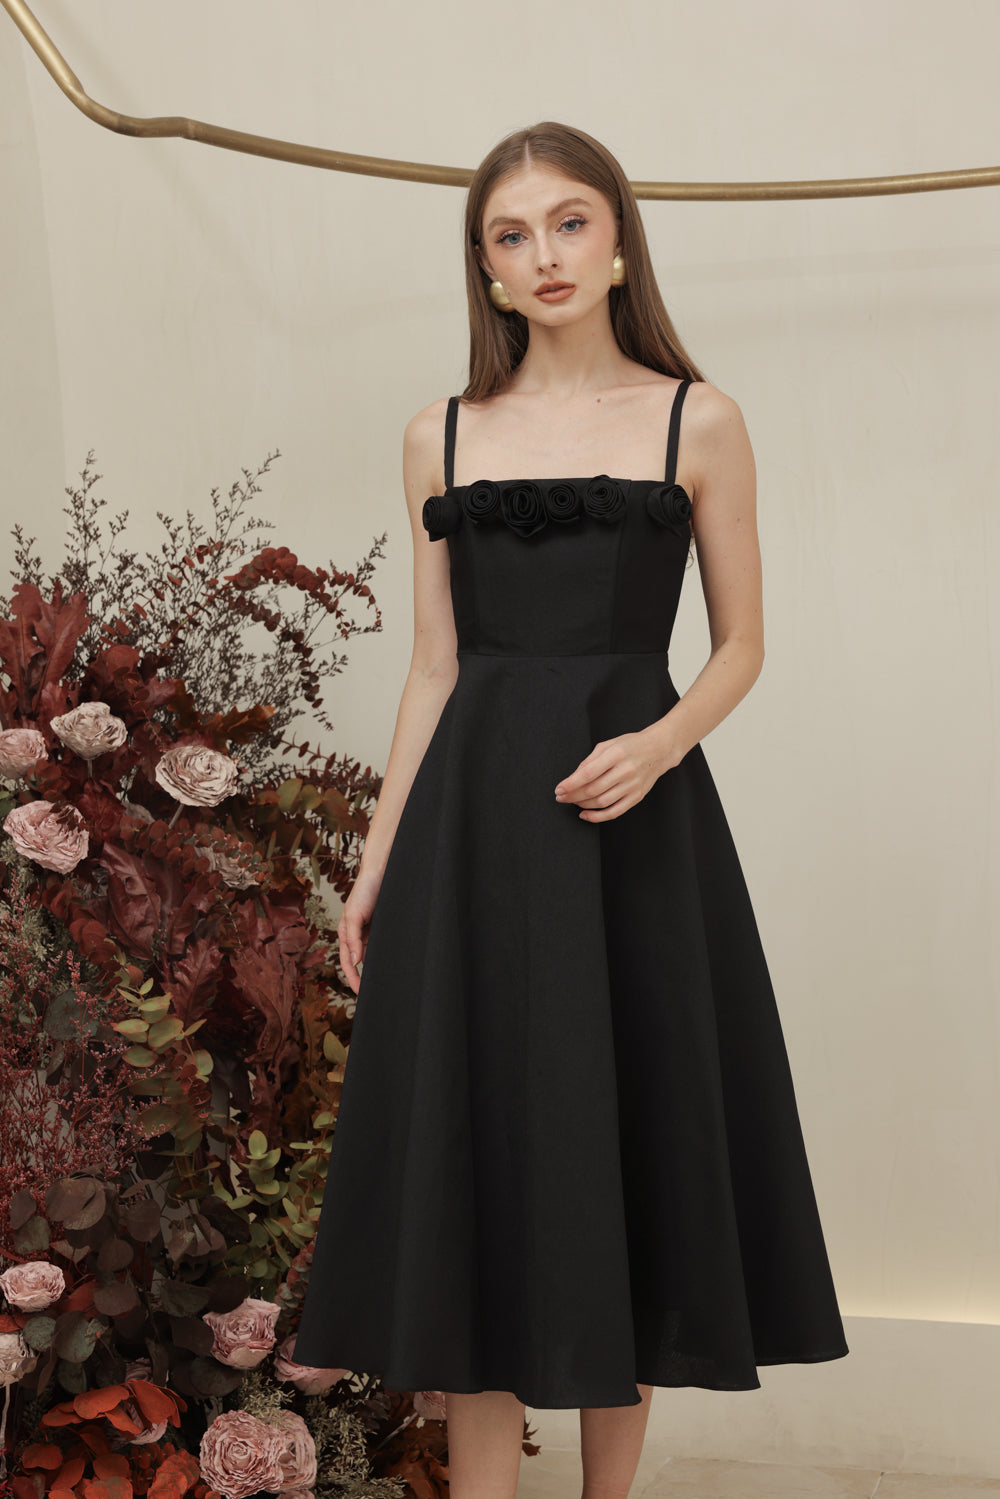 MORGANA DRESS Straight Neckline Strappy Midi Dress with Floral Details (Black Gazaar)